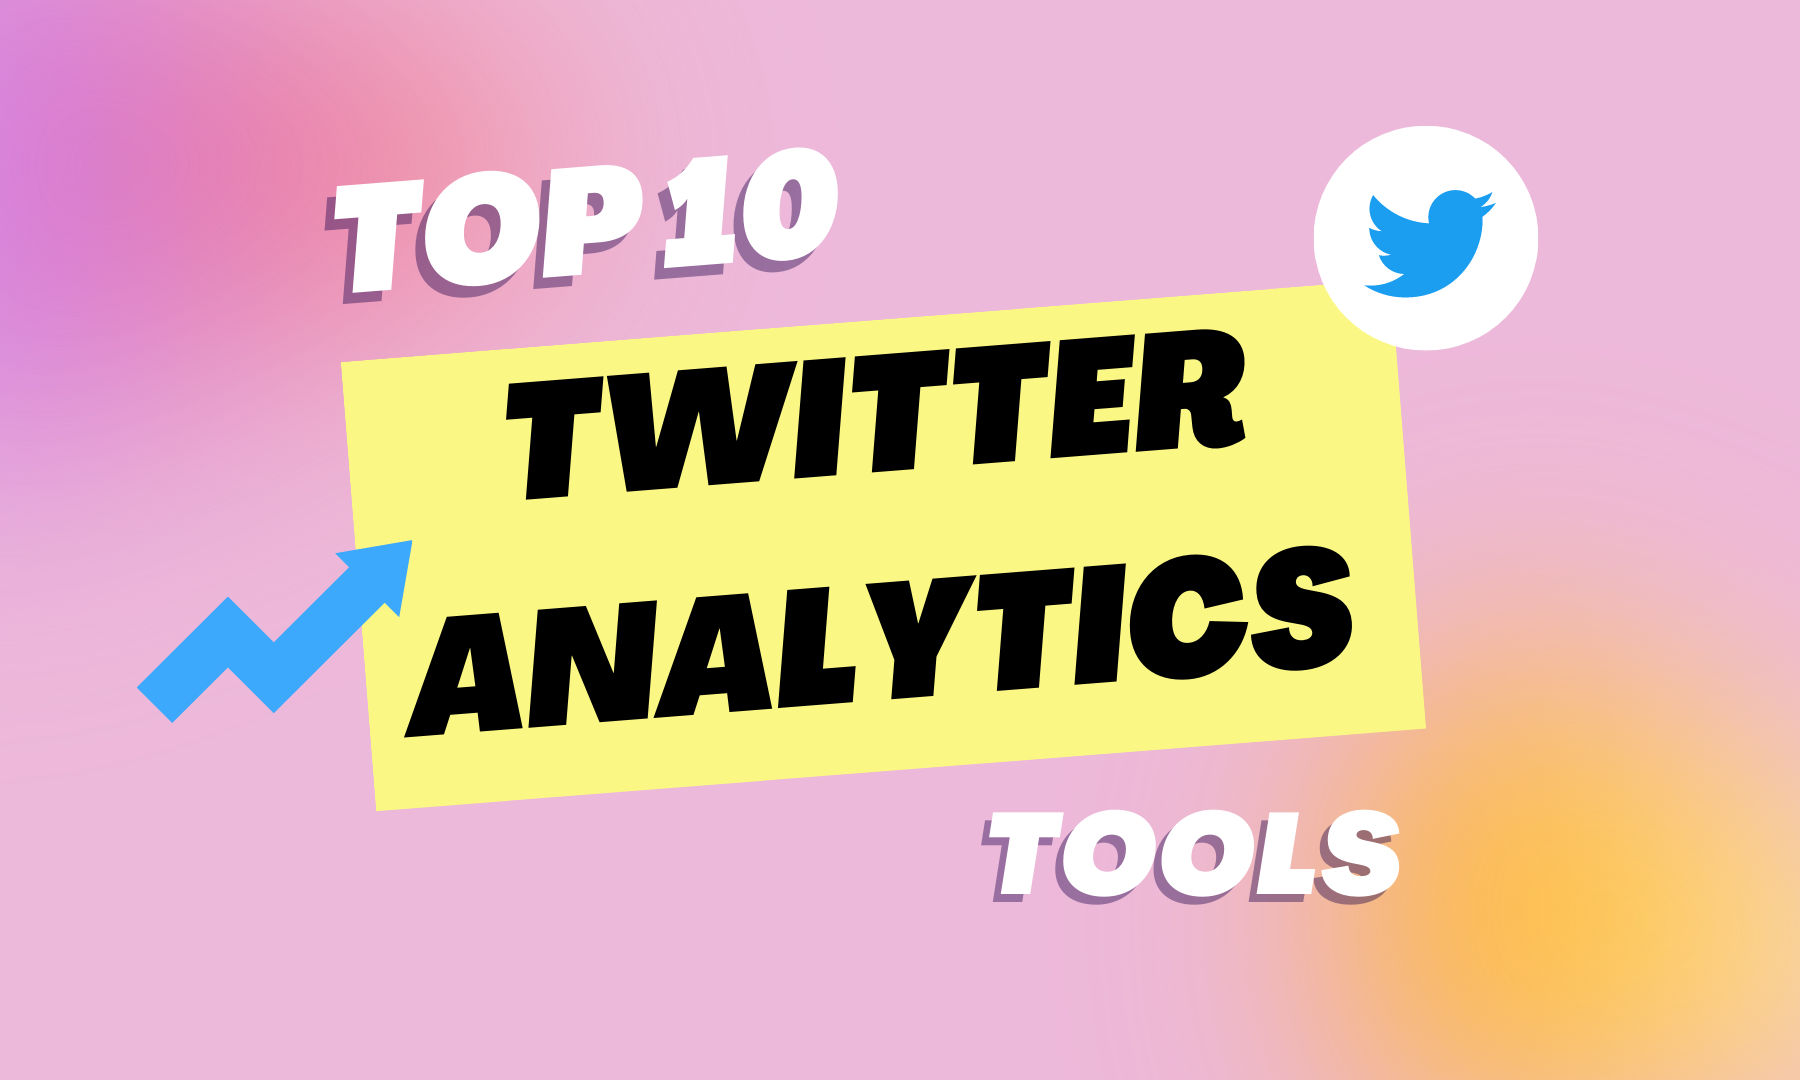 The top 10 Twitter analytics tools